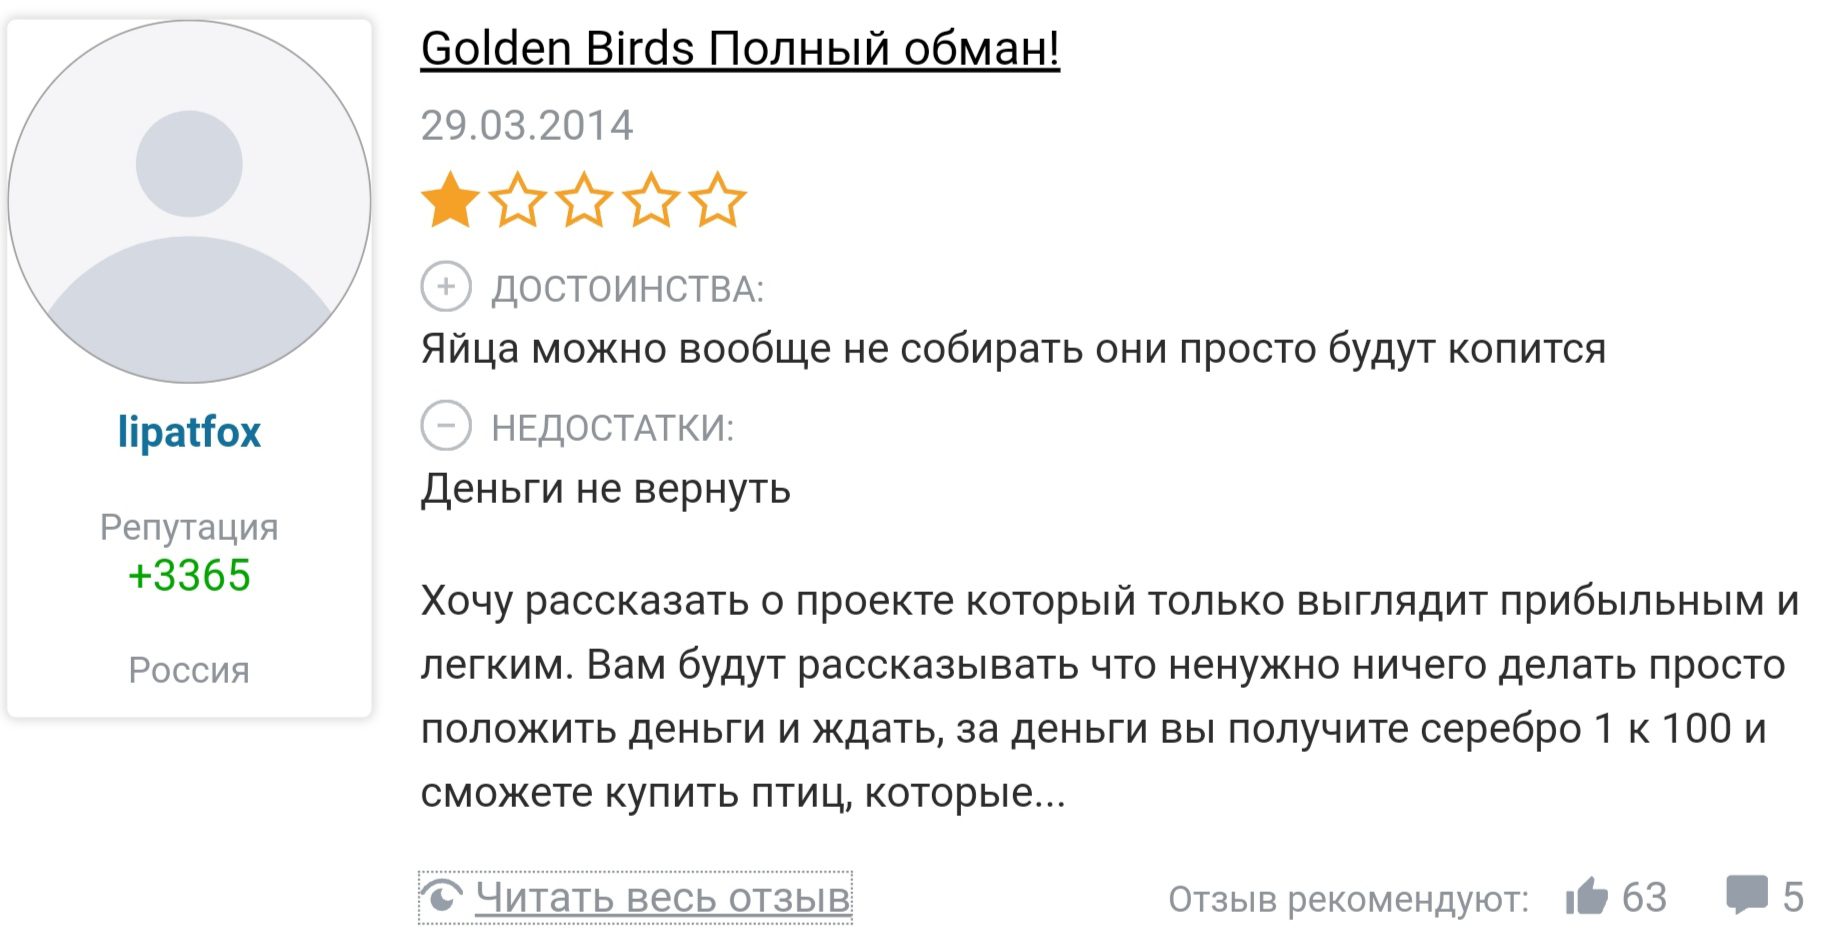 Golden Birds отзывы